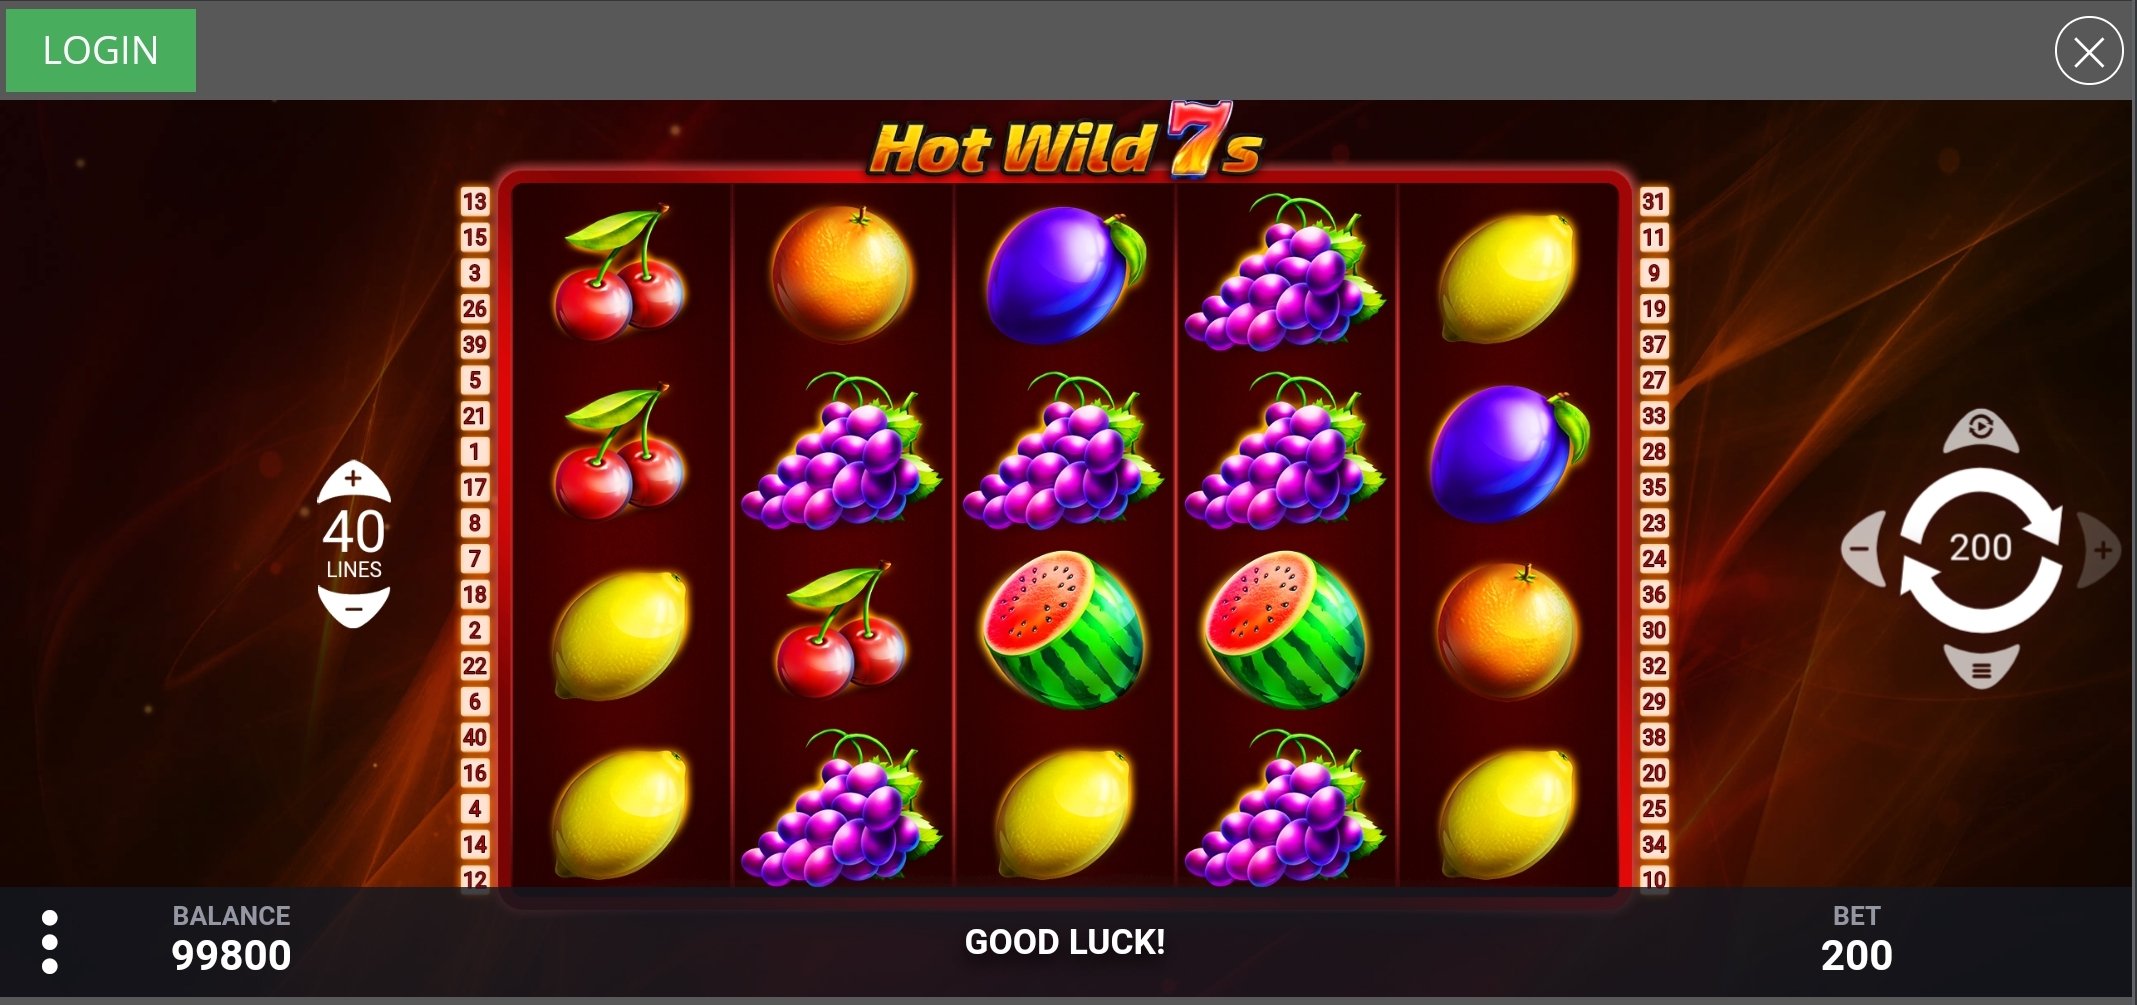 Billion Casino Mobile Slot Games Review